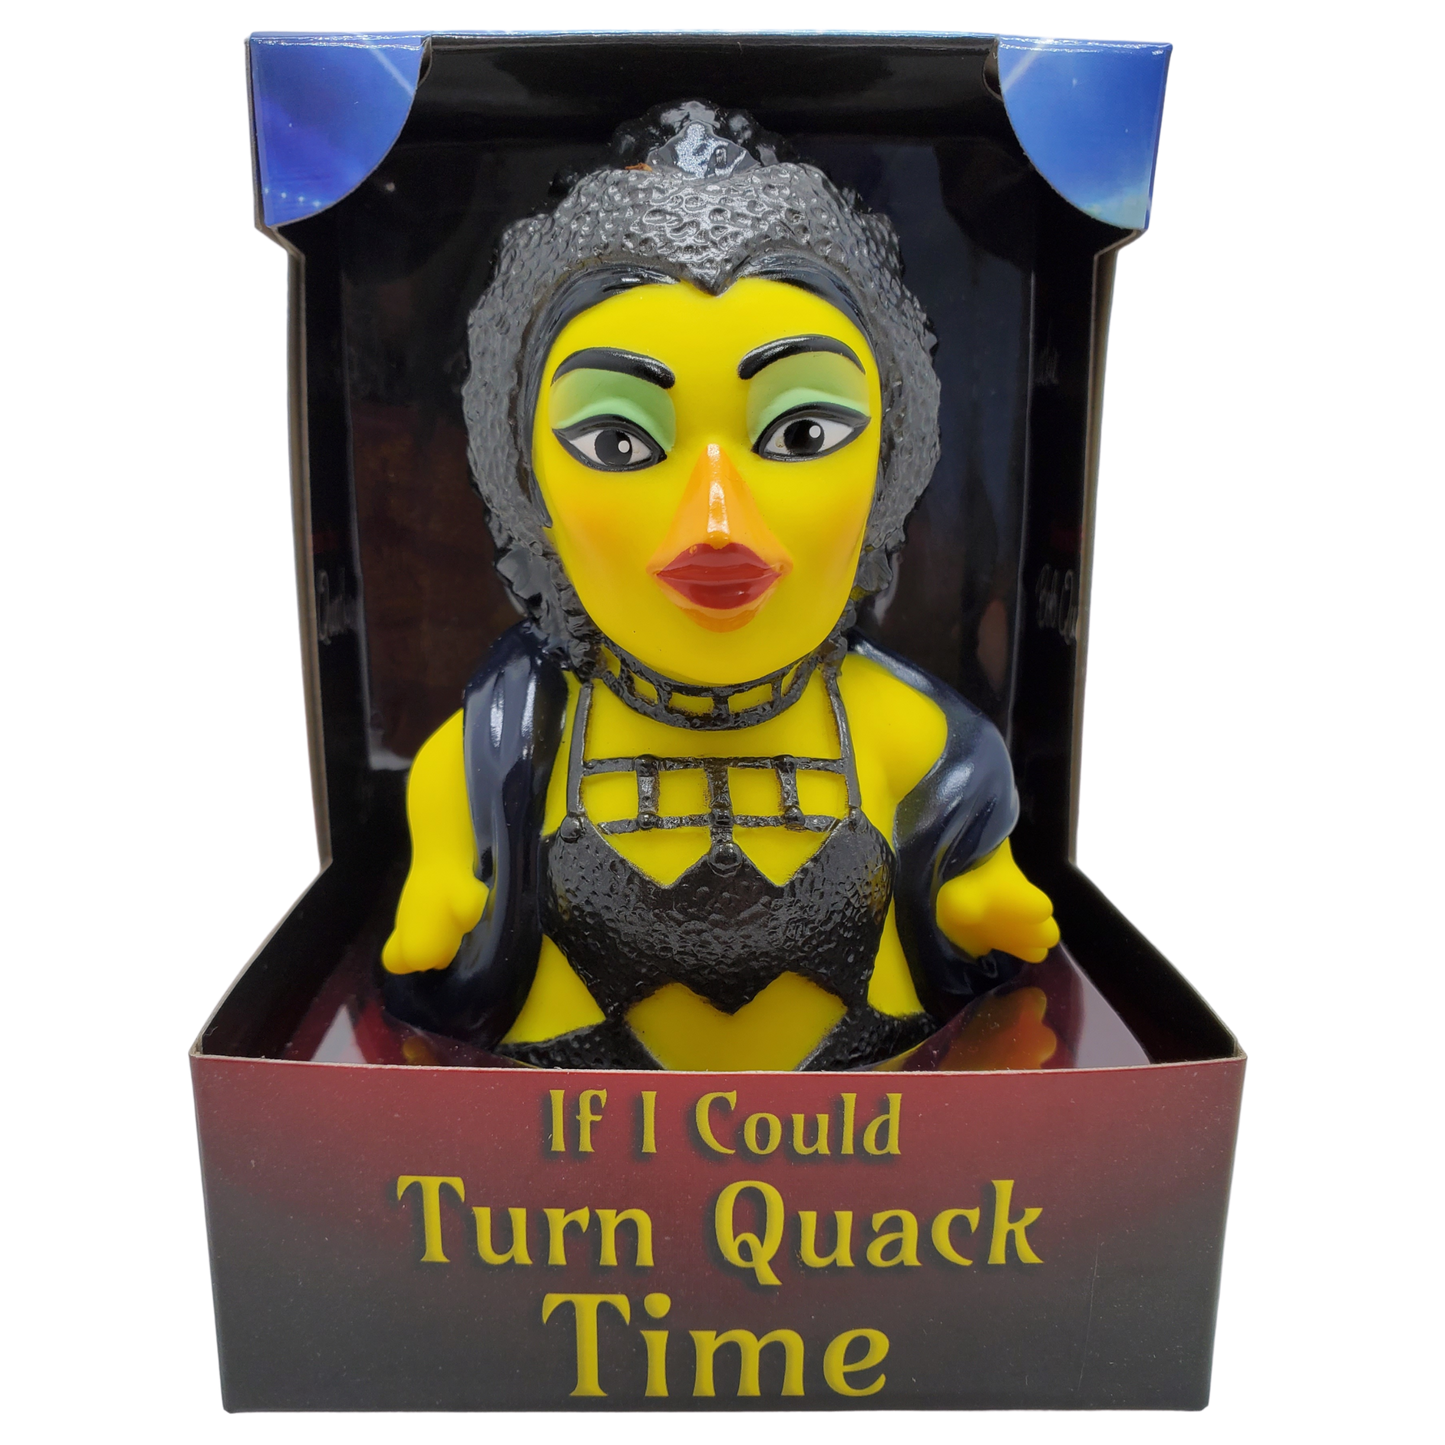 Cher "Take Quack Time" Parody Rubber Duck